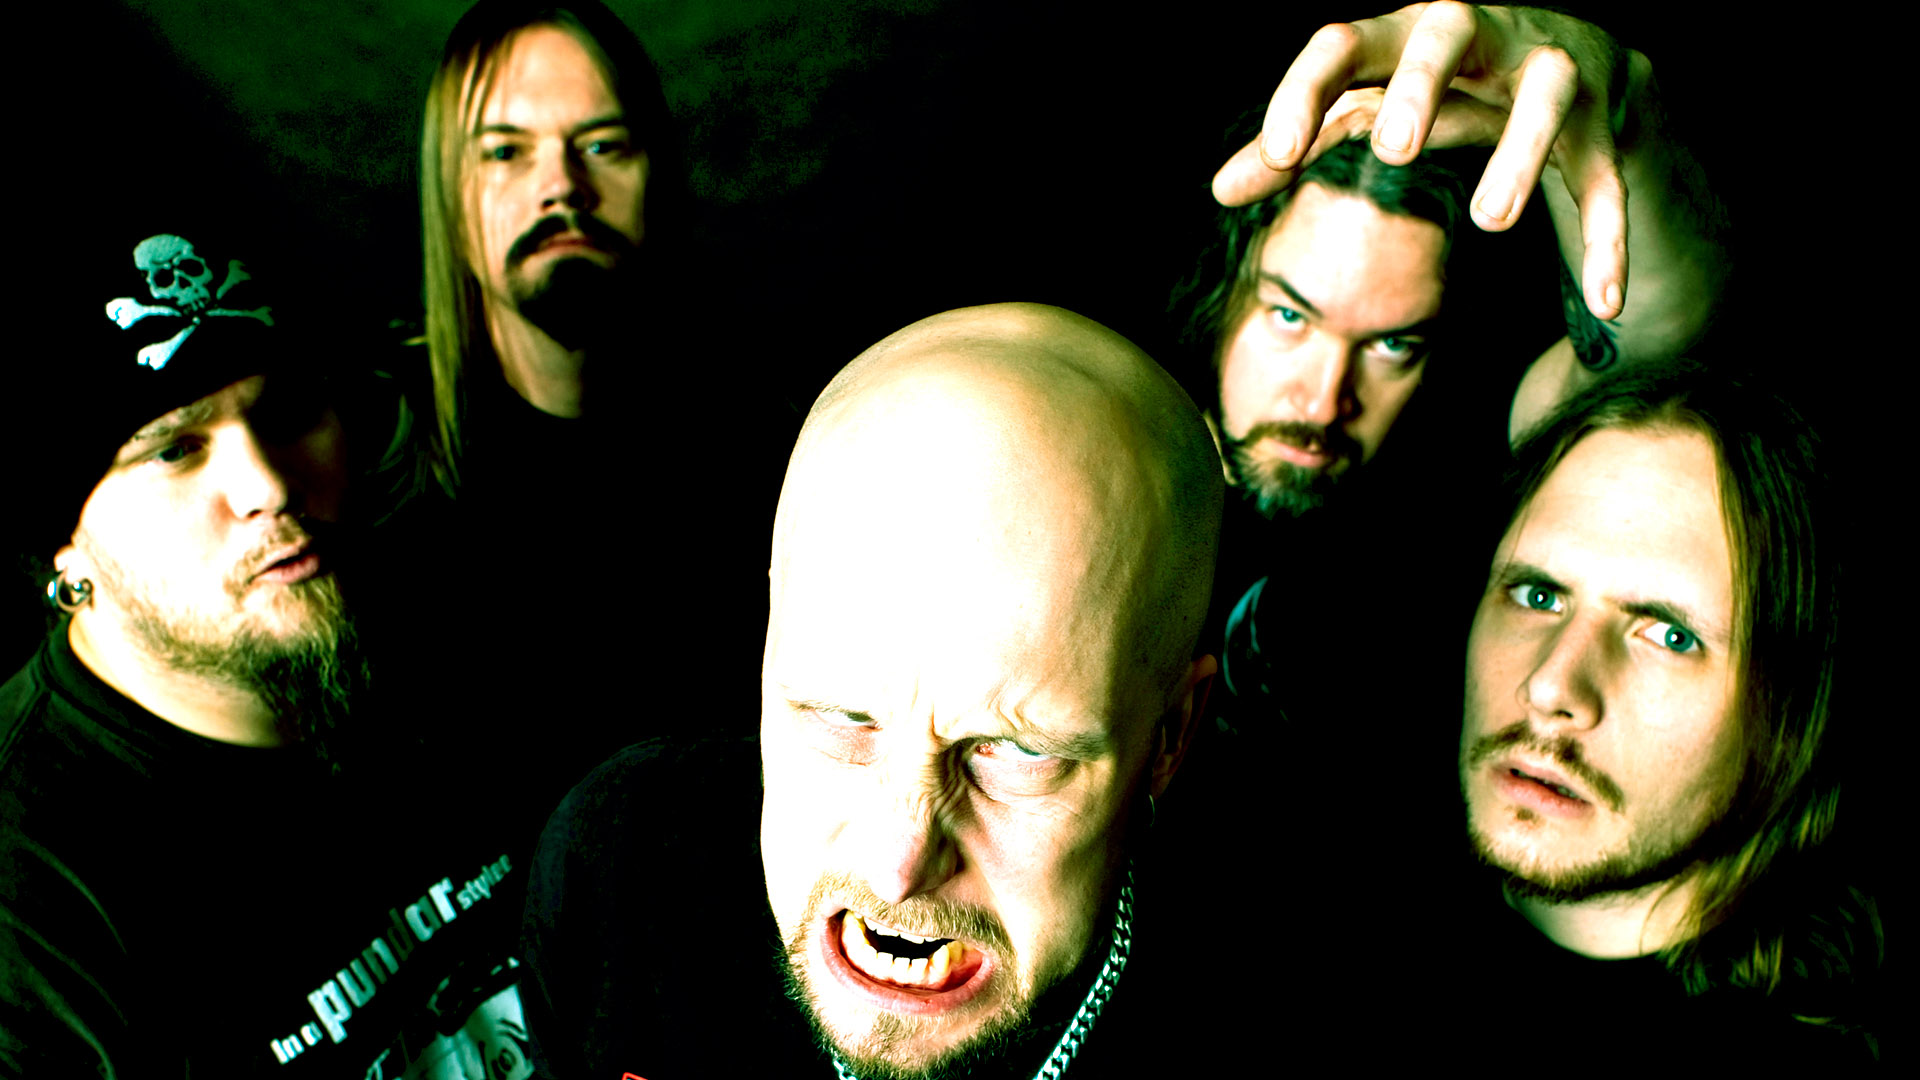 Music Meshuggah HD Wallpaper | Background Image